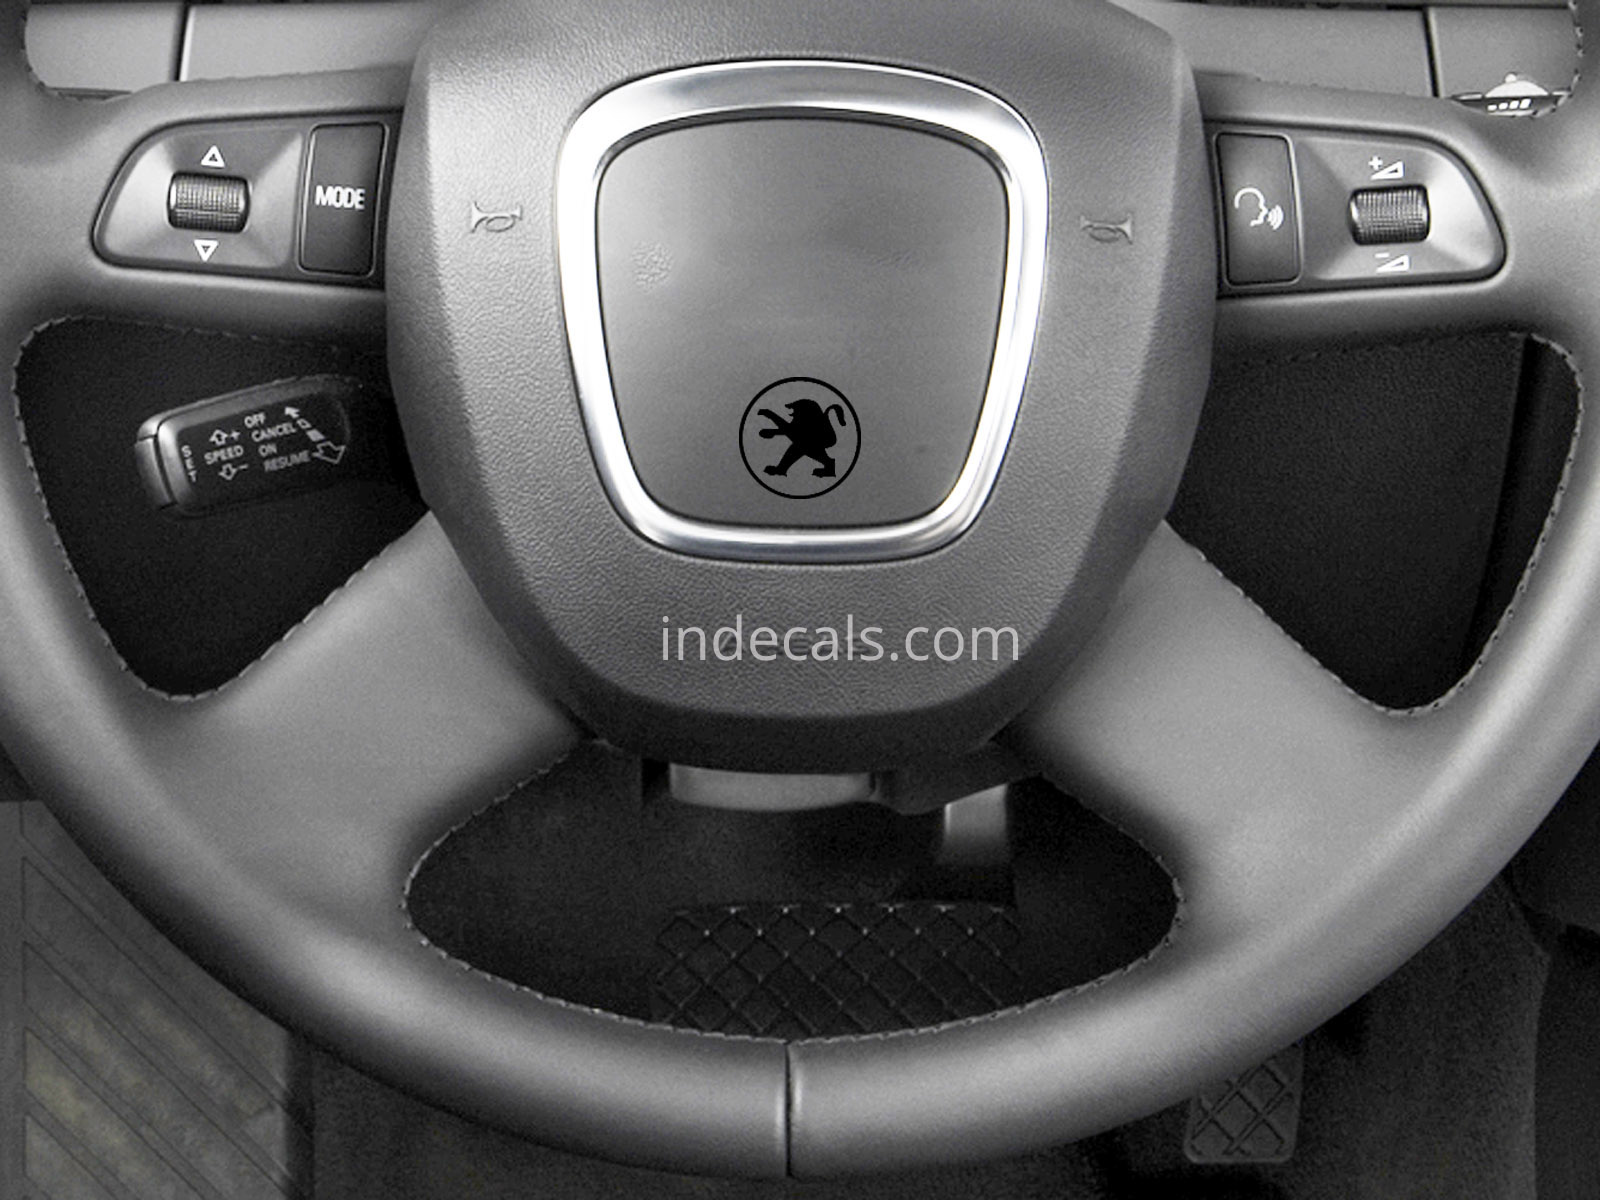 3 x Peugeot Stickers for Steering Wheel - Black